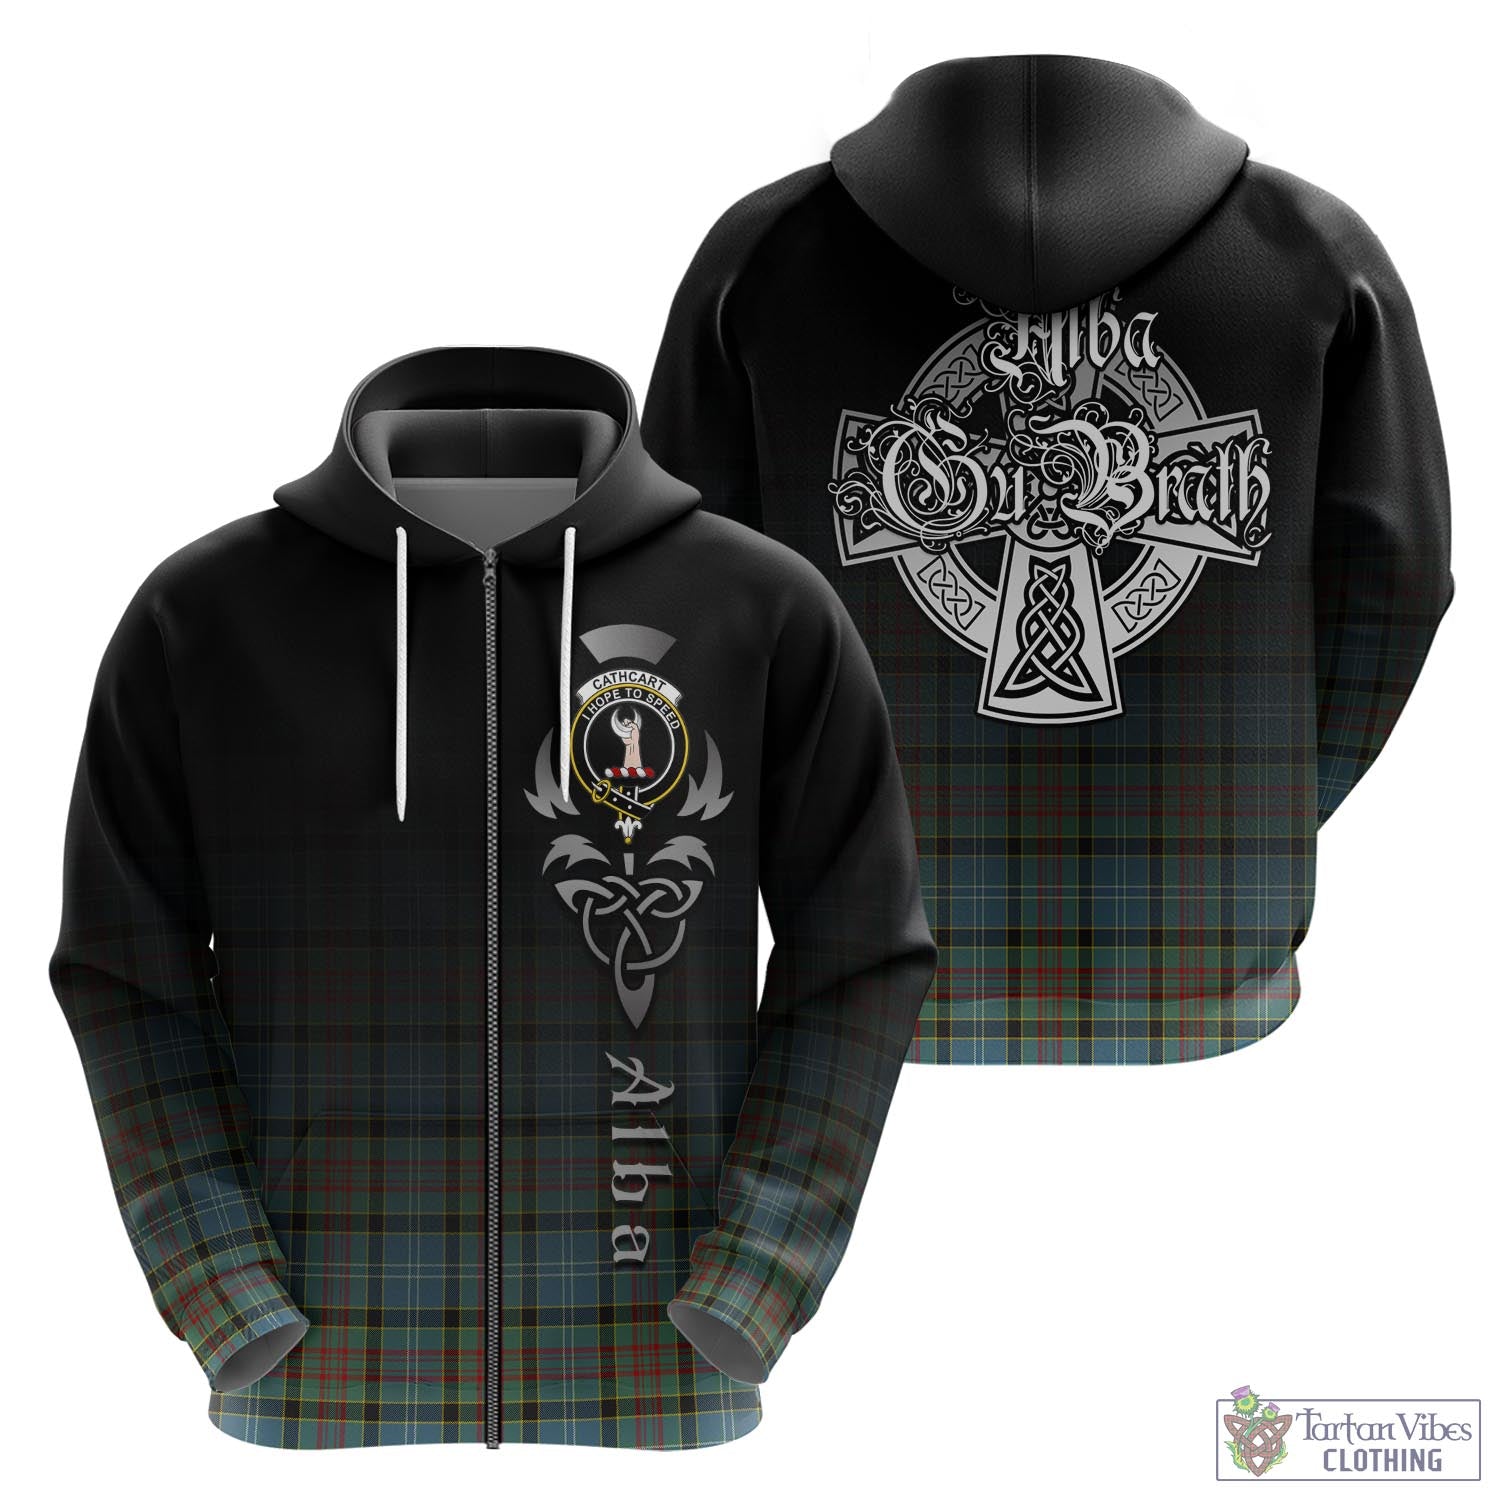 Tartan Vibes Clothing Cathcart Tartan Hoodie Featuring Alba Gu Brath Family Crest Celtic Inspired